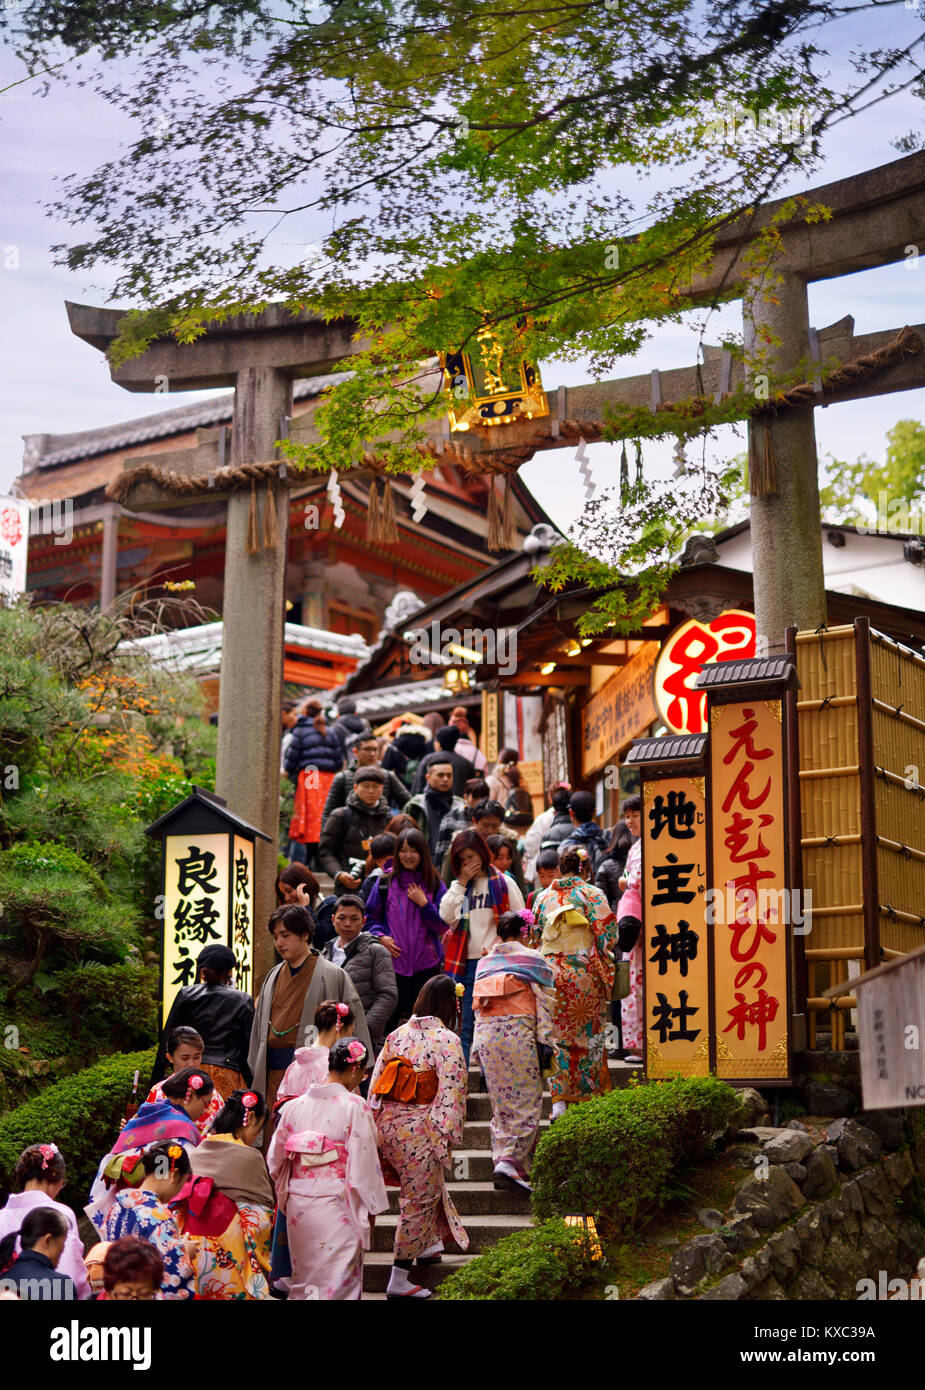 People entering through Torii gate to Jishu Jinja, matchmaking shrine, JishuJinja shrine at Kiyomizu-dera Buddhist temple in Higashiyama, Kyoto, Japan Stock Photo